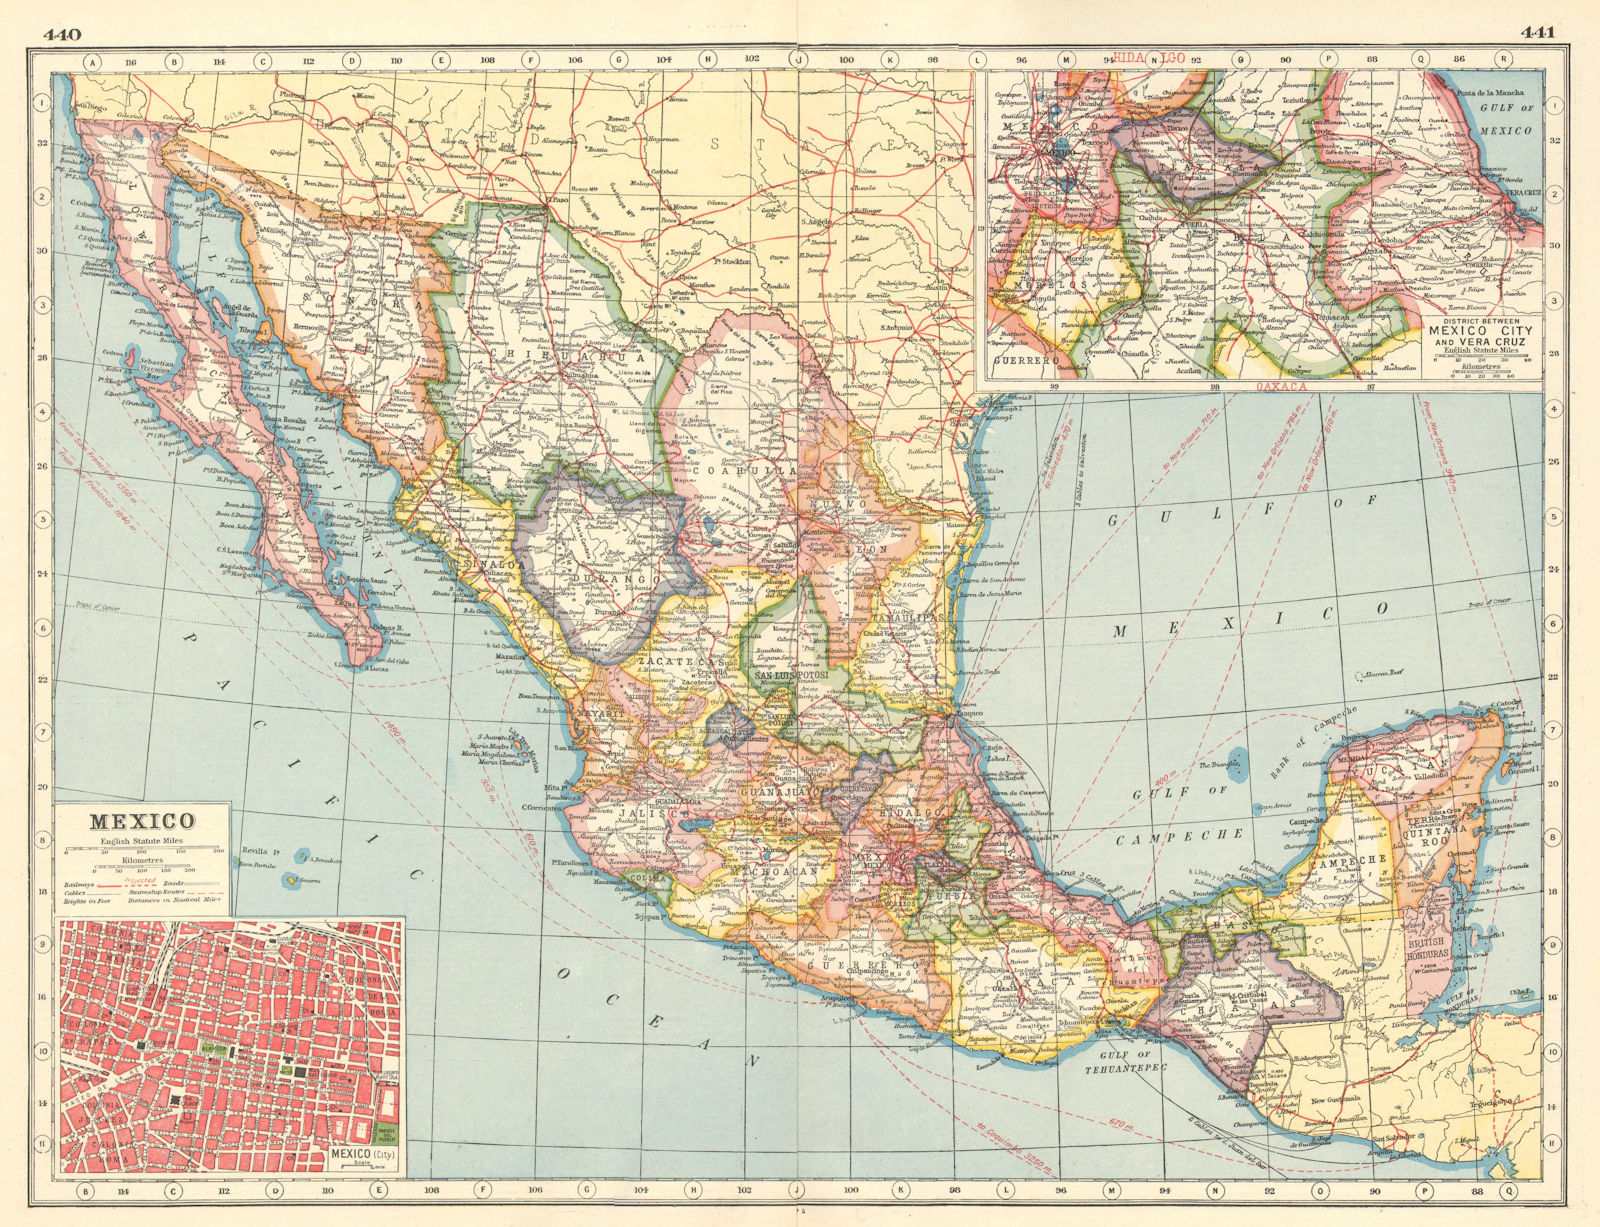 MEXICO. Inset Mexico City plan; Mexico City-Veracruz district 1920 old map